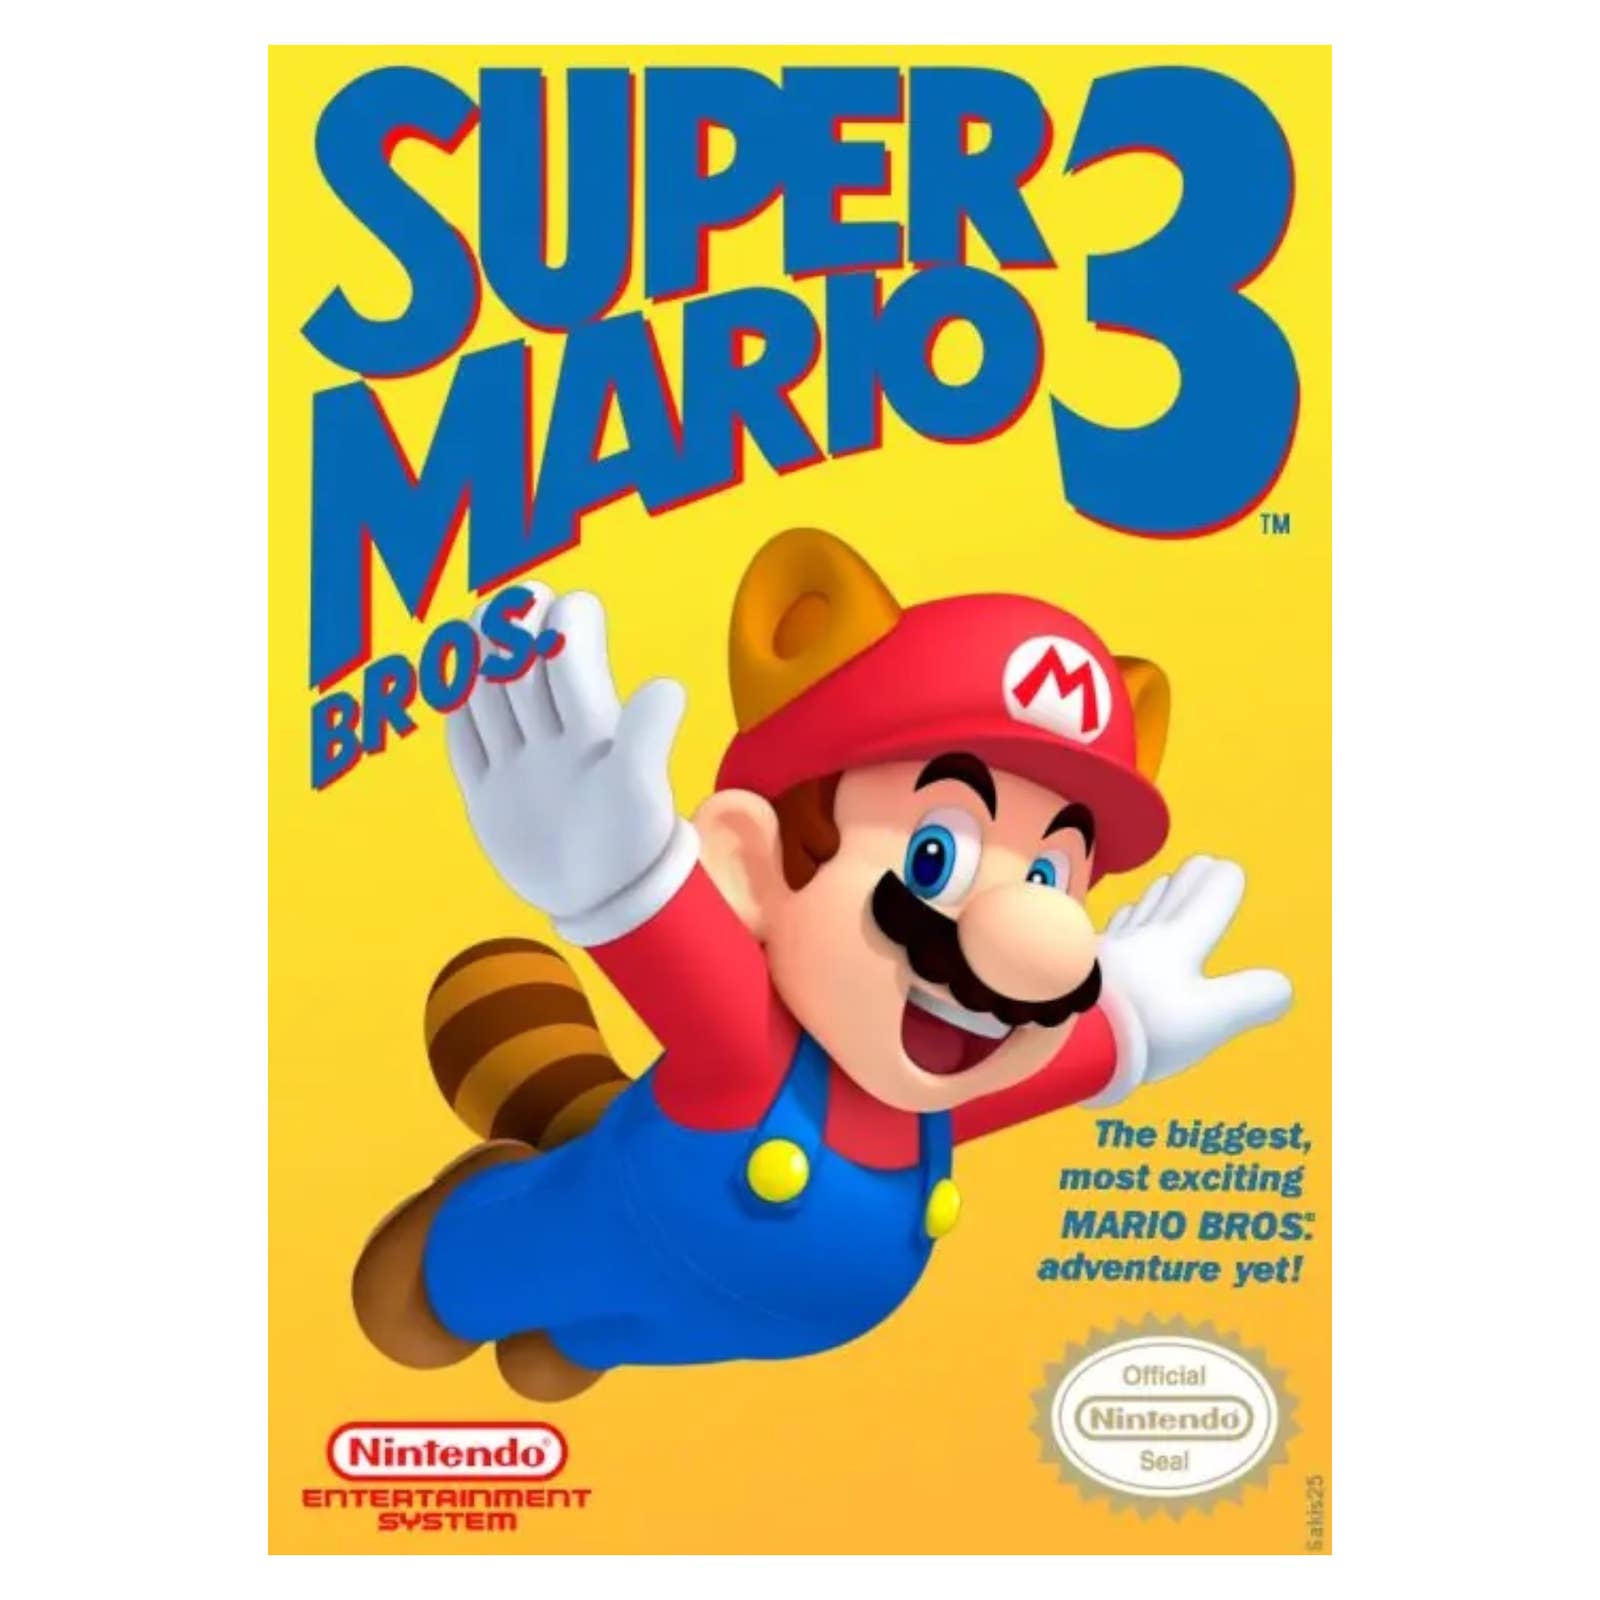 Super Mario Bros 3 Game Poster | Nintendo | NES | NEW | USA